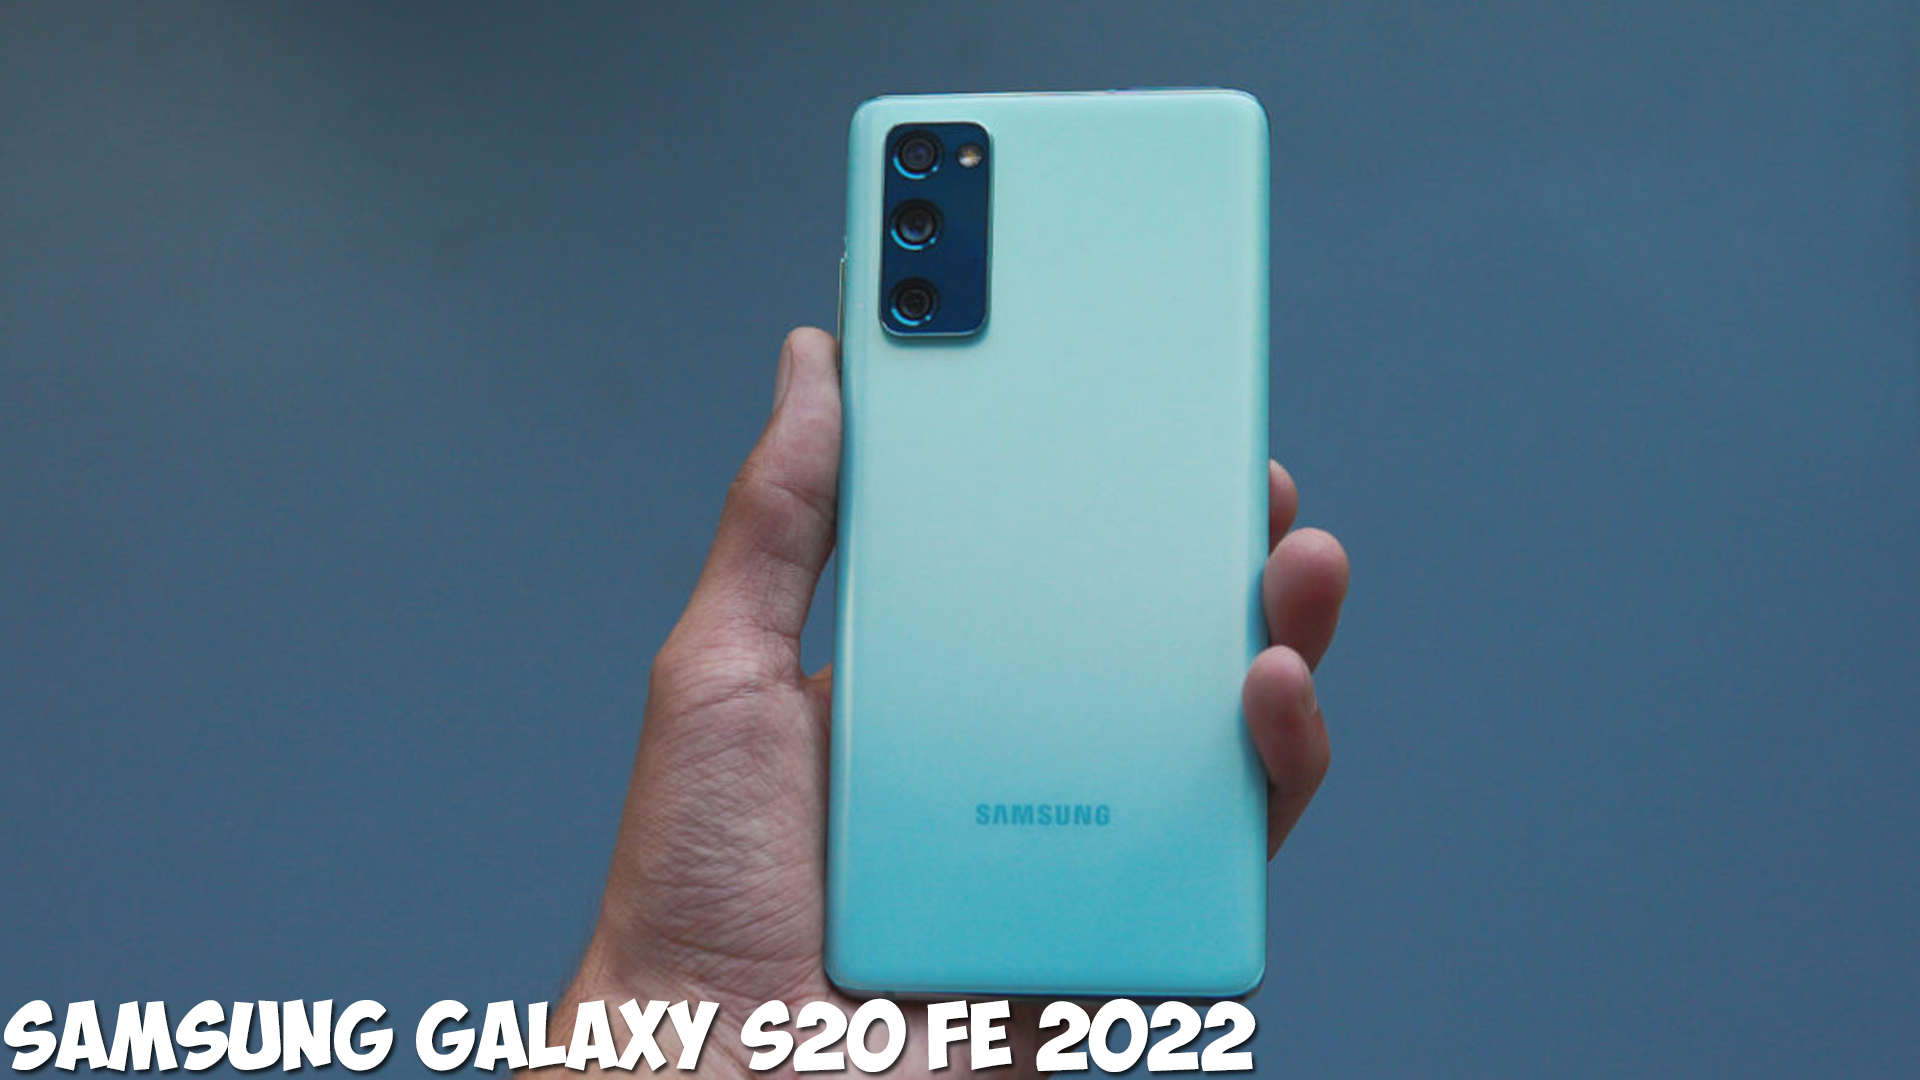 Samsung s20 fe 8. Samsung Galaxy s20 Fe. Samsung Galaxy 20 Fe. Самсунг галакси с 20 Фе. Samsung Galaxy s20 Fe 128.